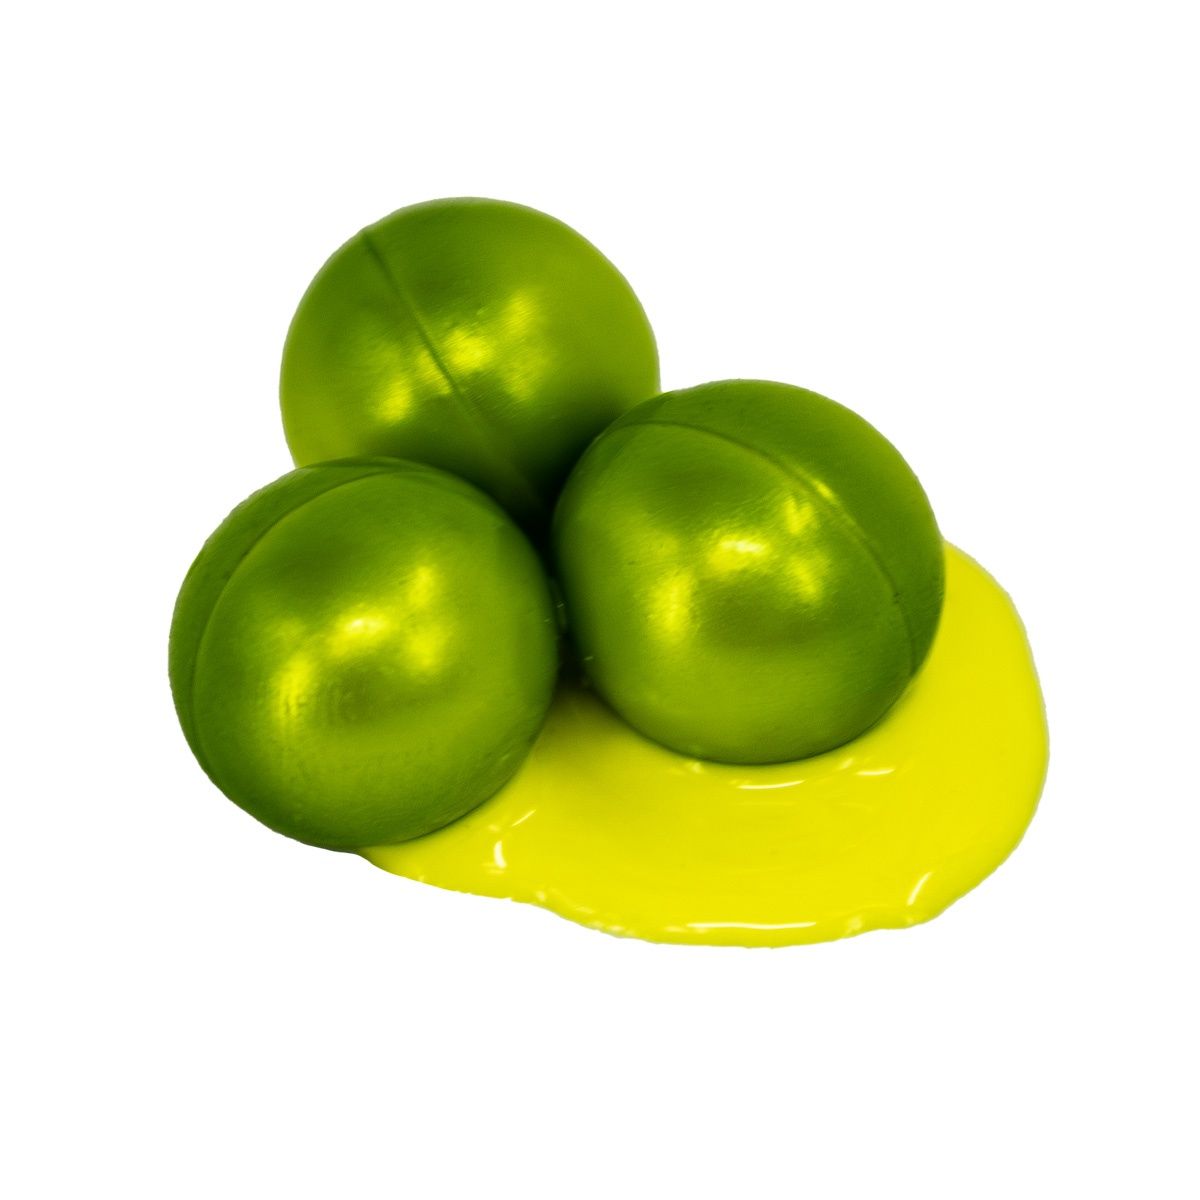 Valken Redemption PRO 68 Caliber Paintballs - 2000 Ct., Colour: Metallic Green (Yellow Fill)